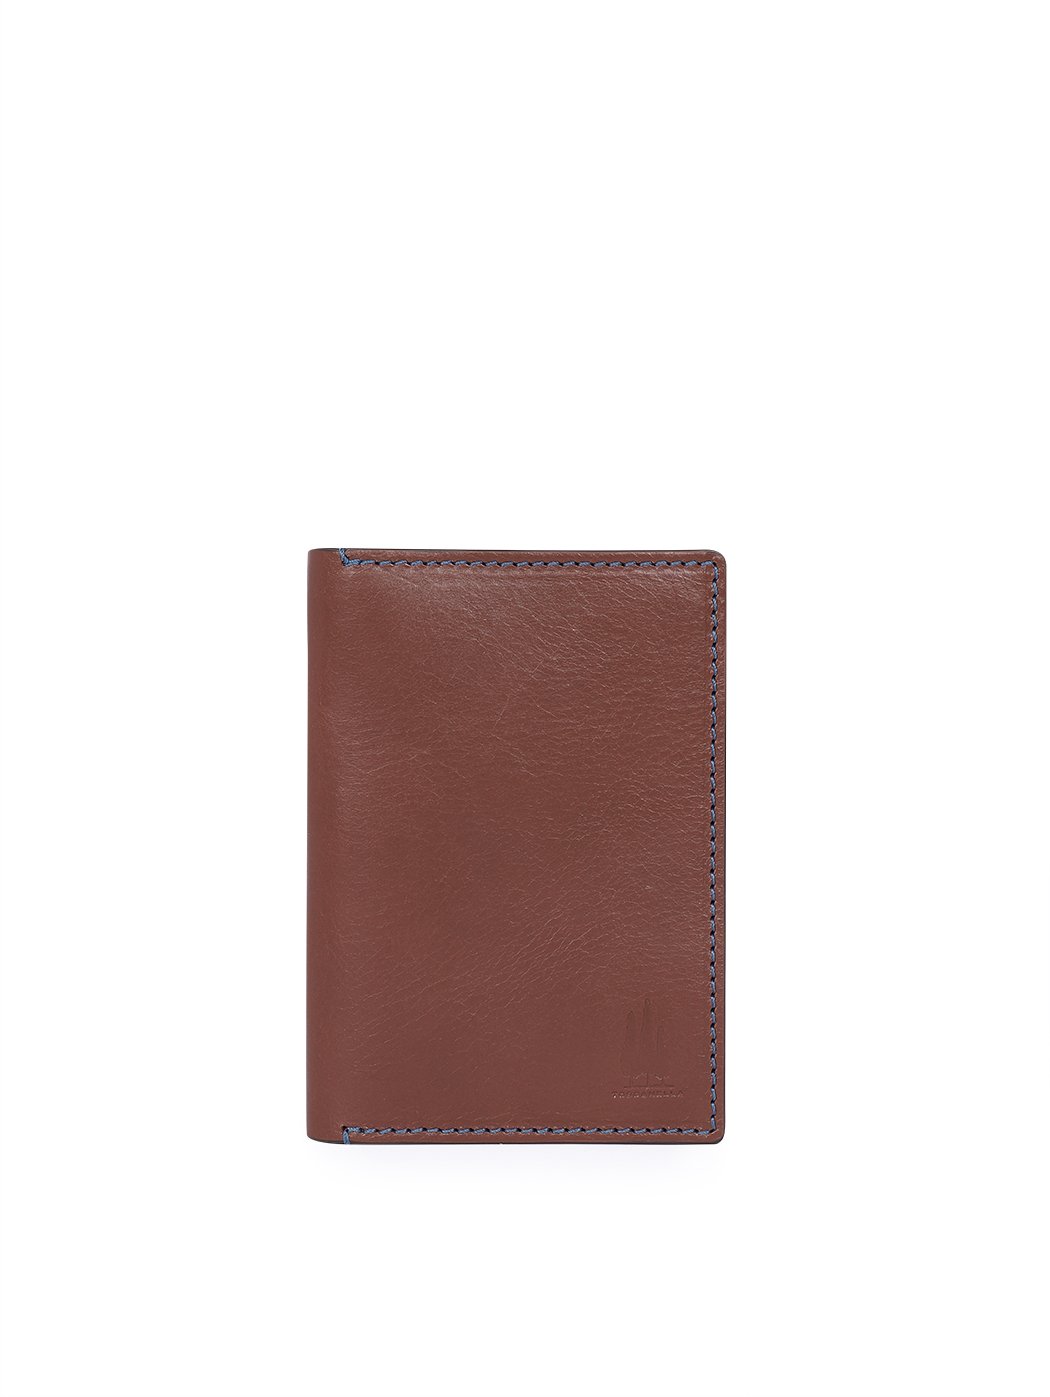 Passport Cover Cuoio Leather Dark brown